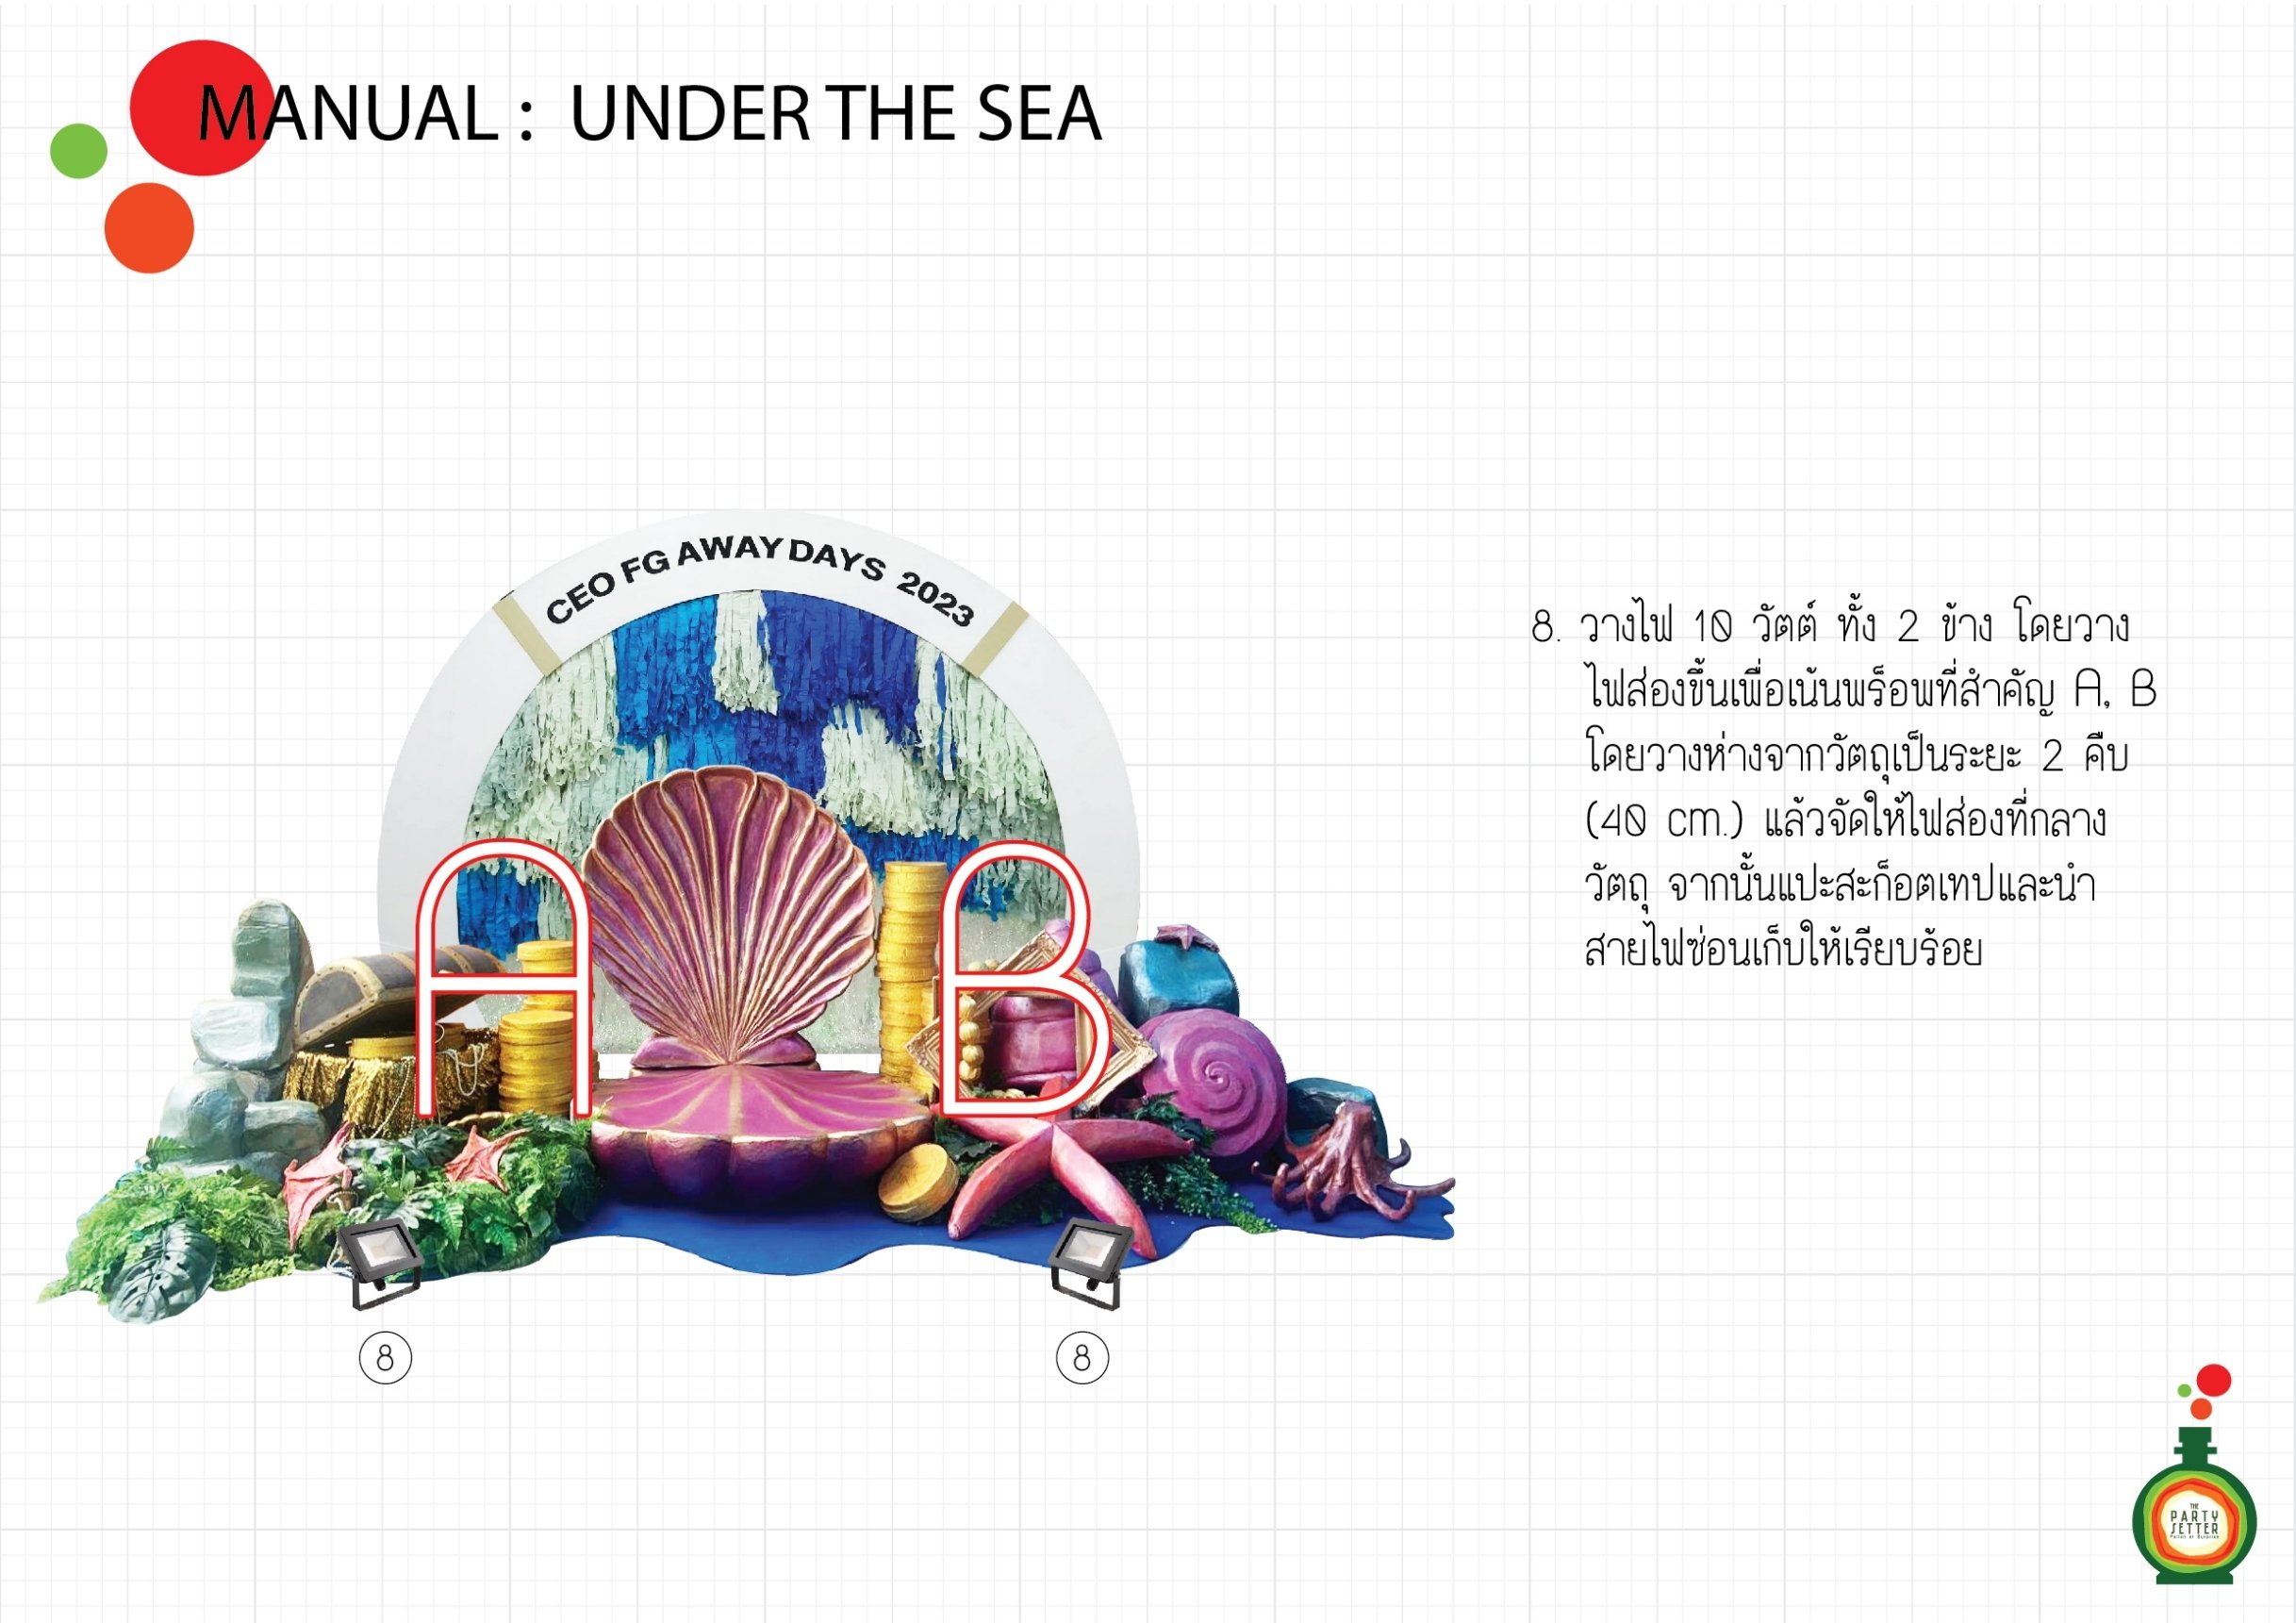 Manual_Under the Sea-08-01.jpg